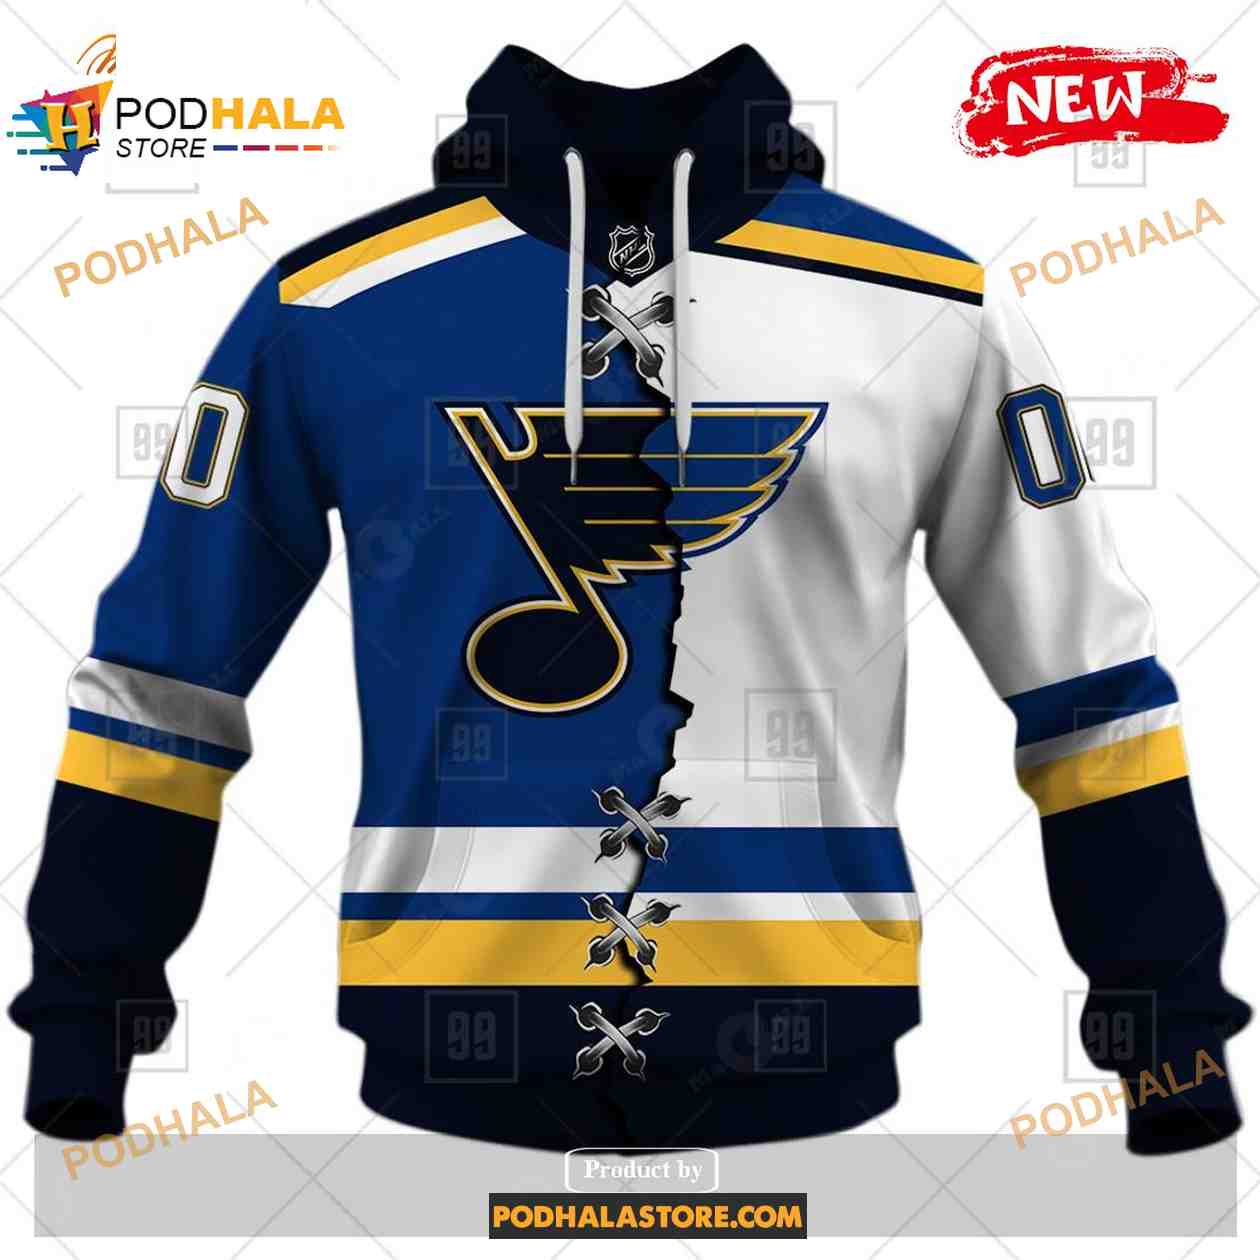 St. Louis Blues Sweatshirt in 2023  Sweatshirts, Hockey sweatshirts, Vintage  sweatshirt